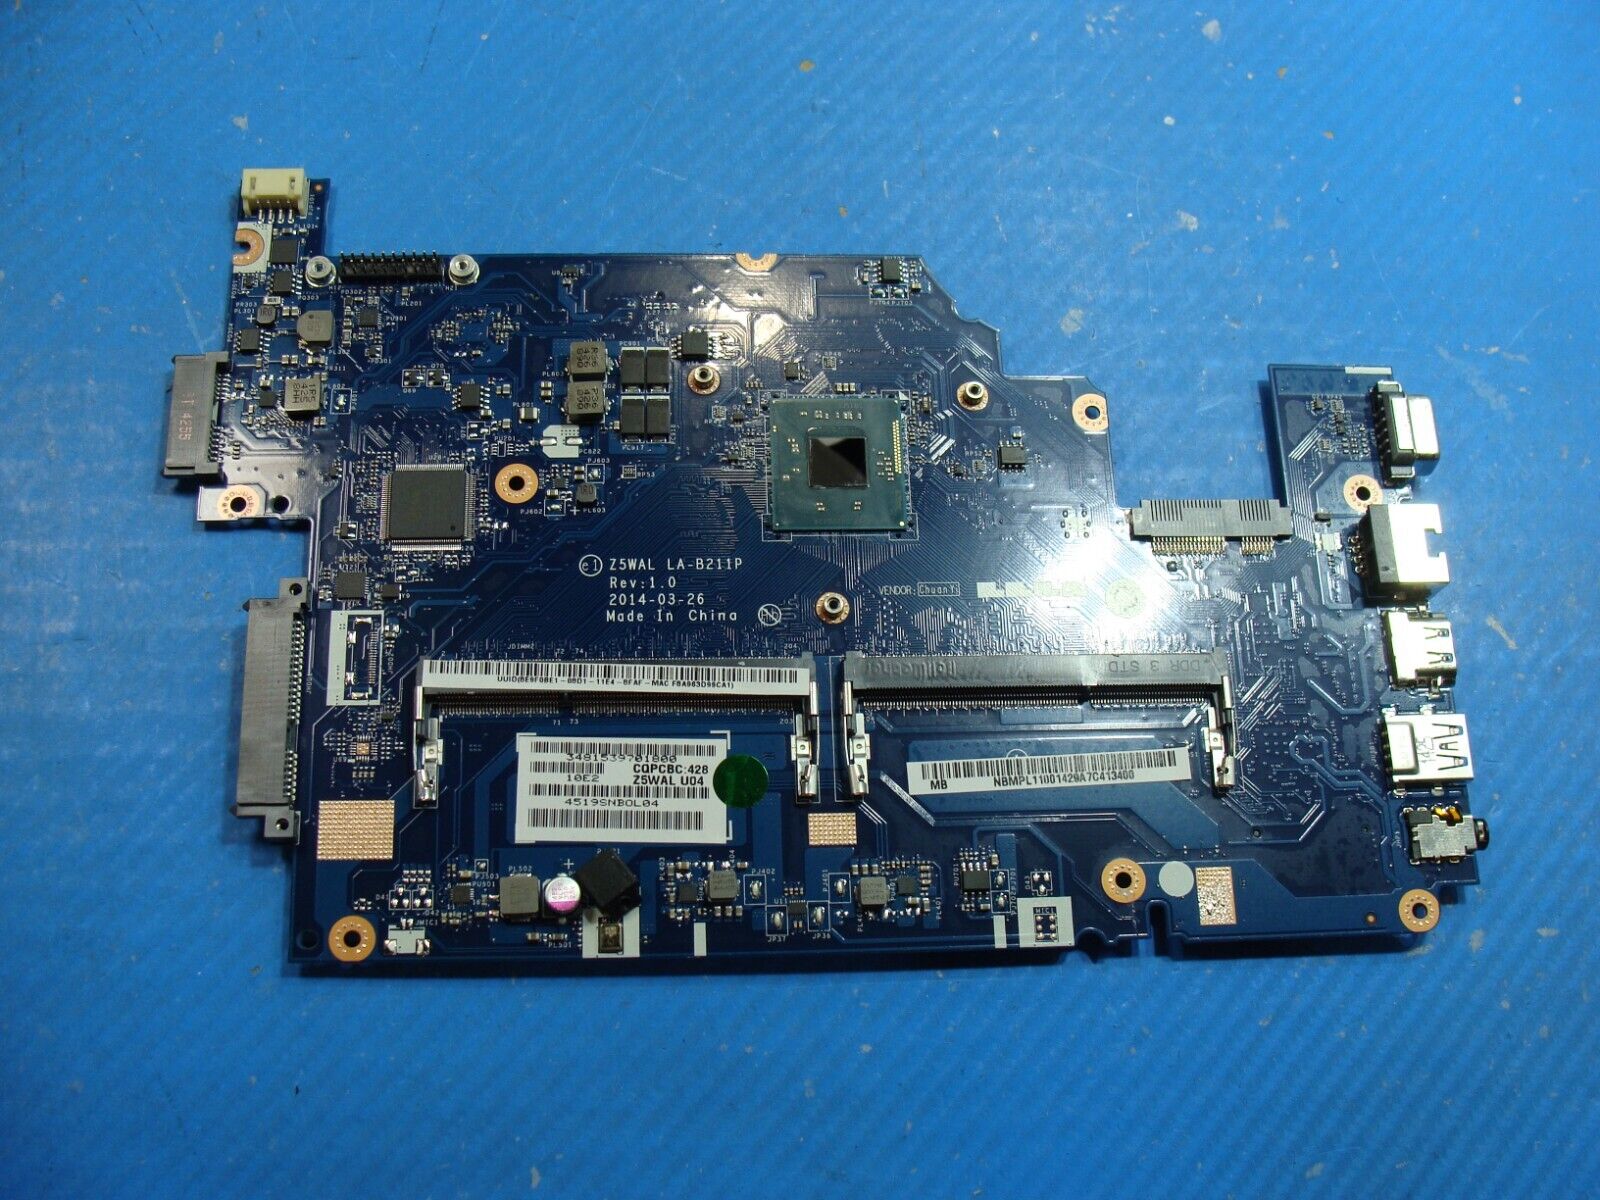 Acer Aspire E5-511P-C9BM 15.6 N2930 1.83GHz Motherboard NBMPL11001 LA-B211P